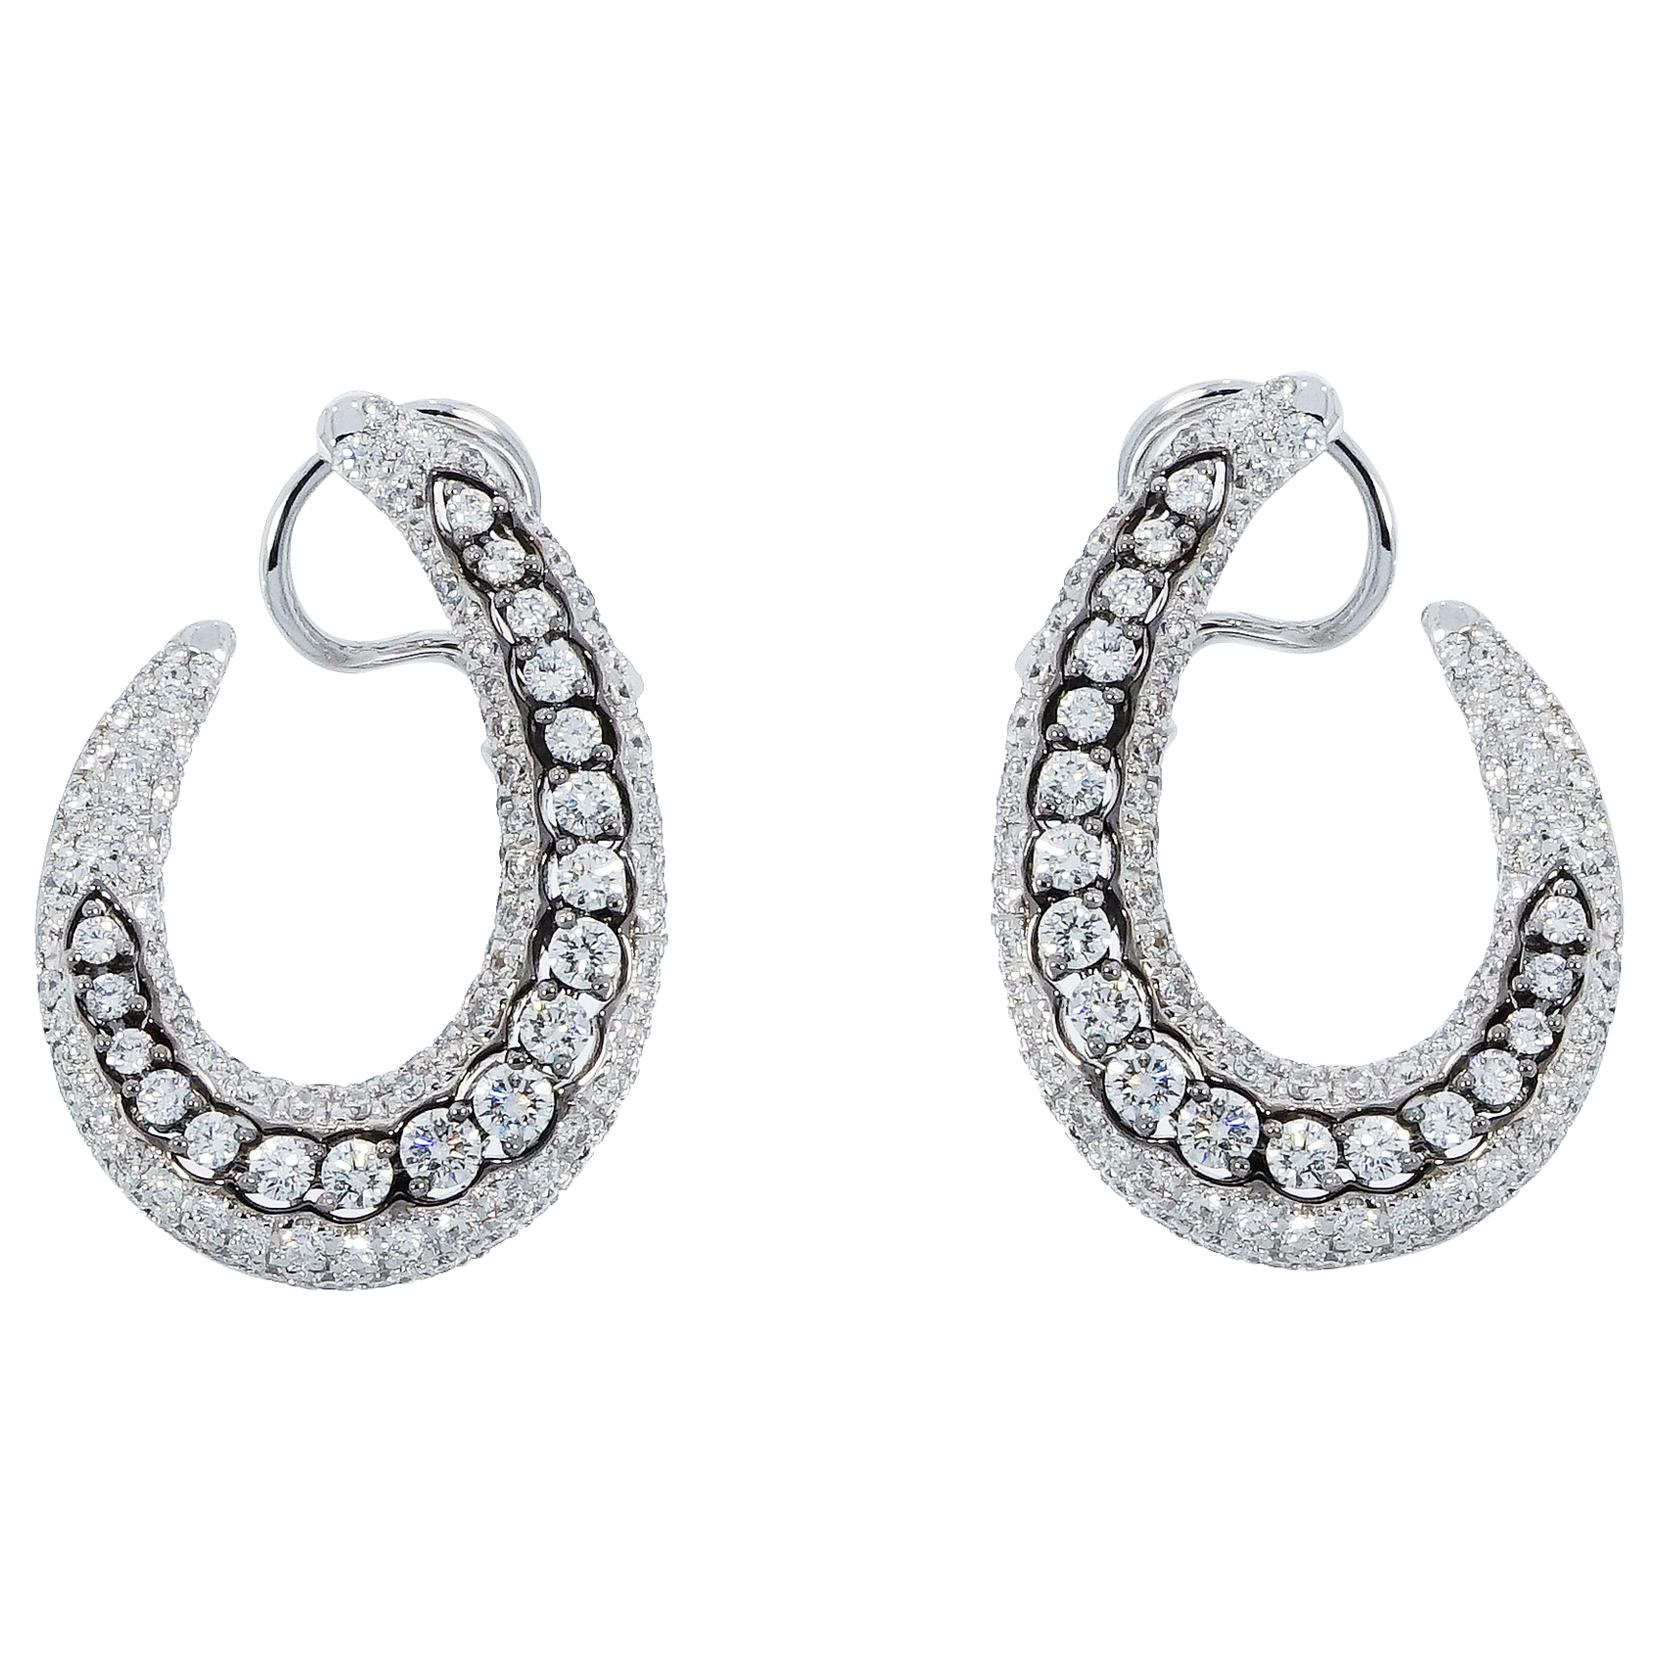 White Gold Diamond Earrings by Casato